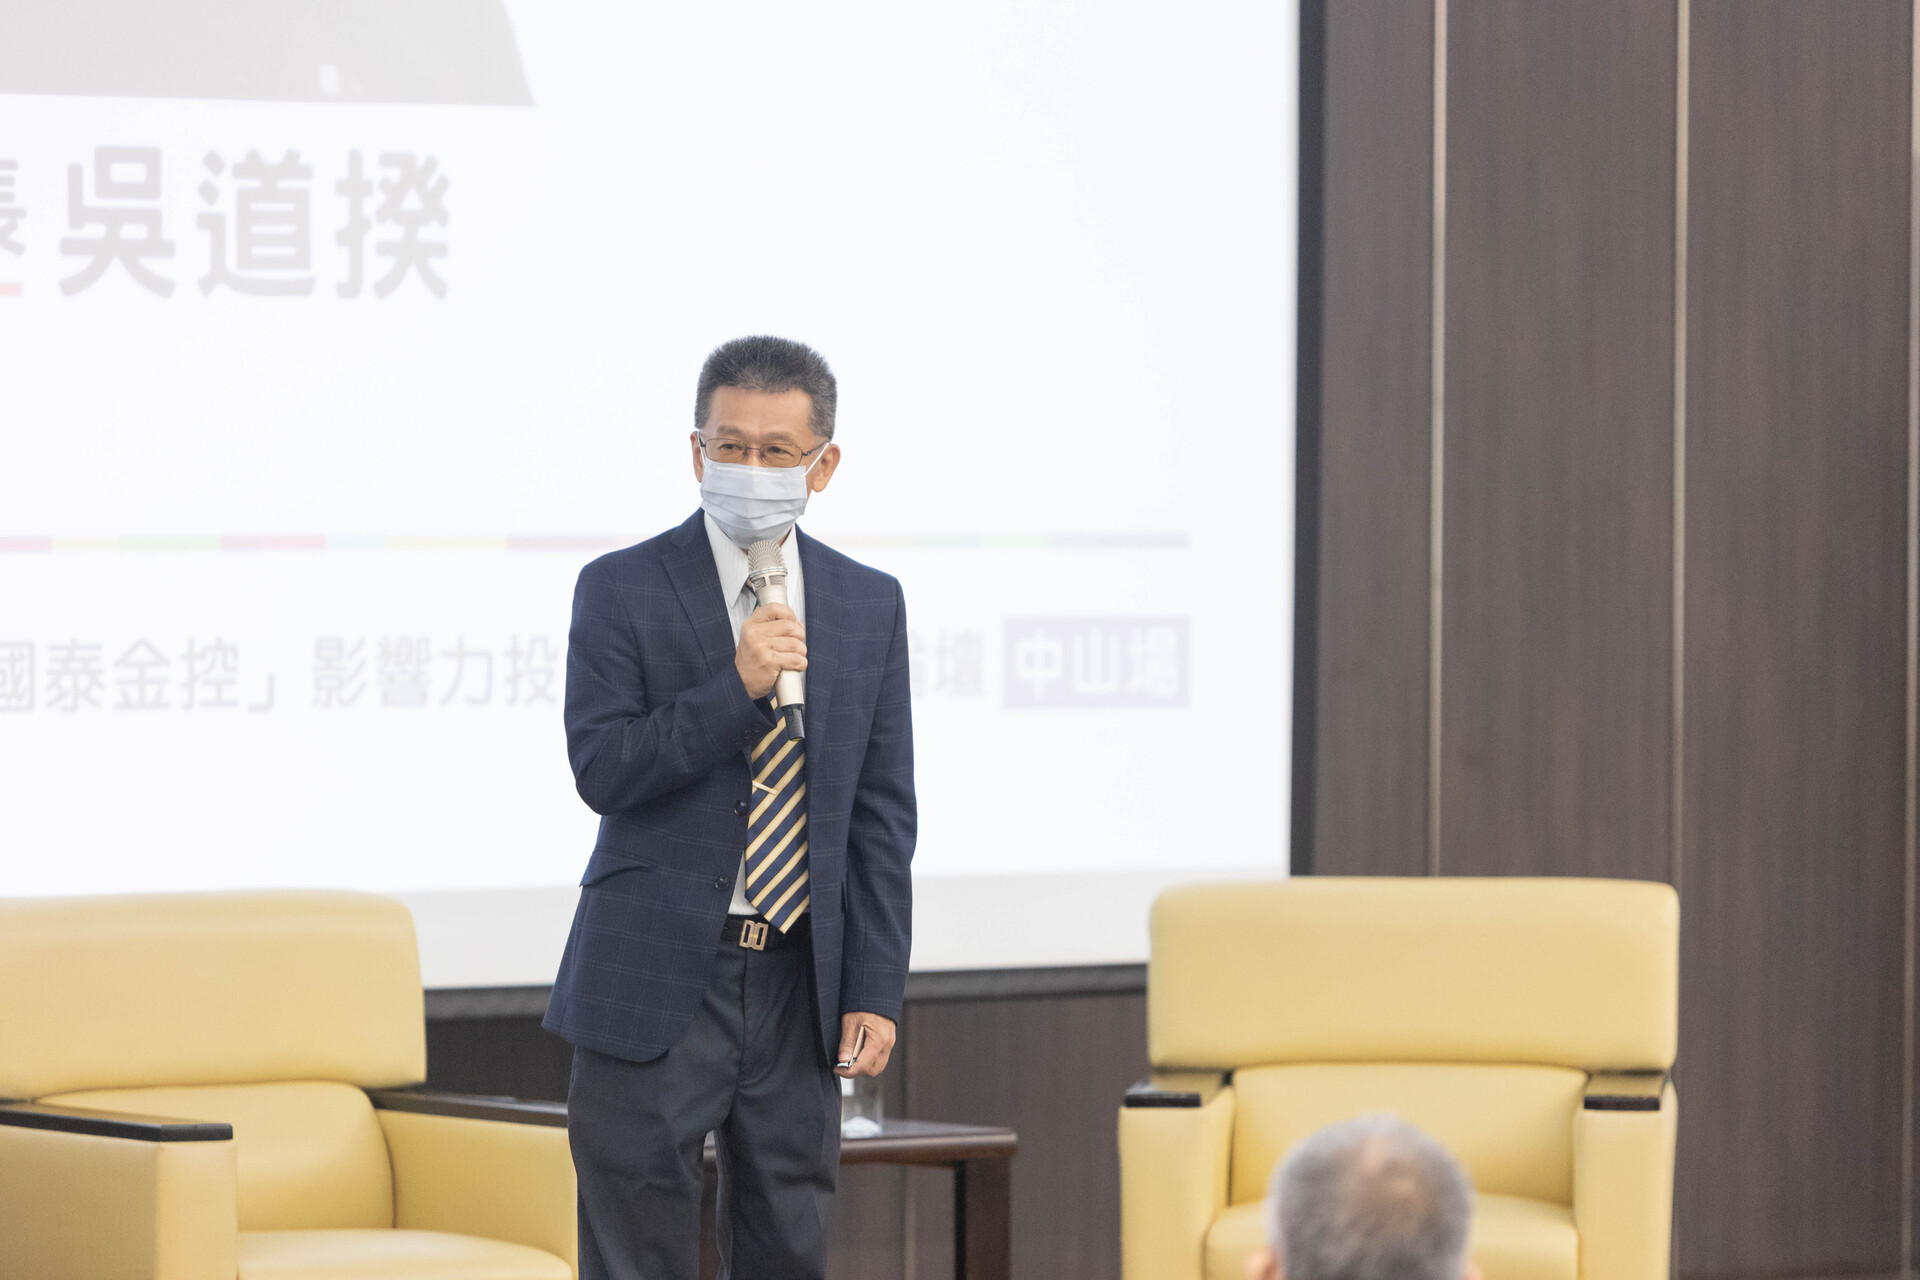 Speech by Associate Dean Jui-Kun Kuo of the College of Management, NSYSU